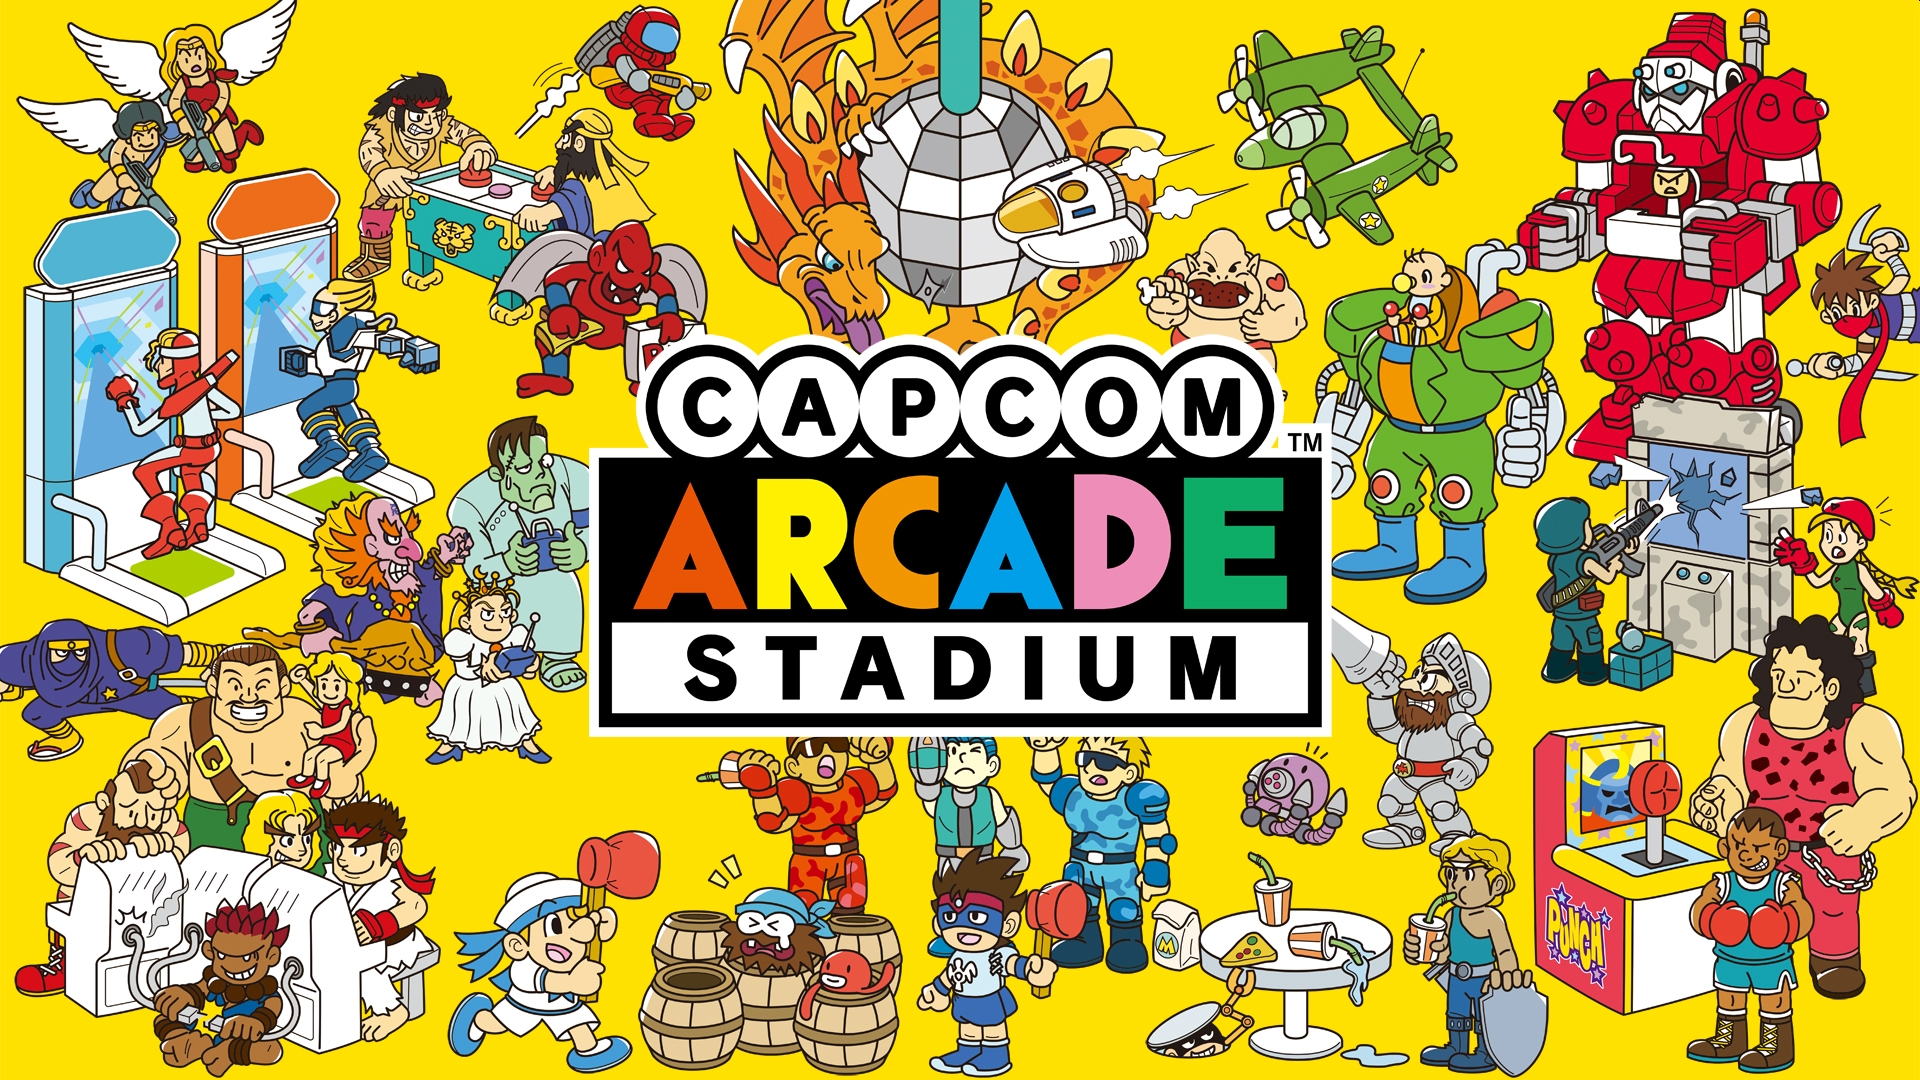 Capcom Arcade Stadium Makes Its Debut In February 2021